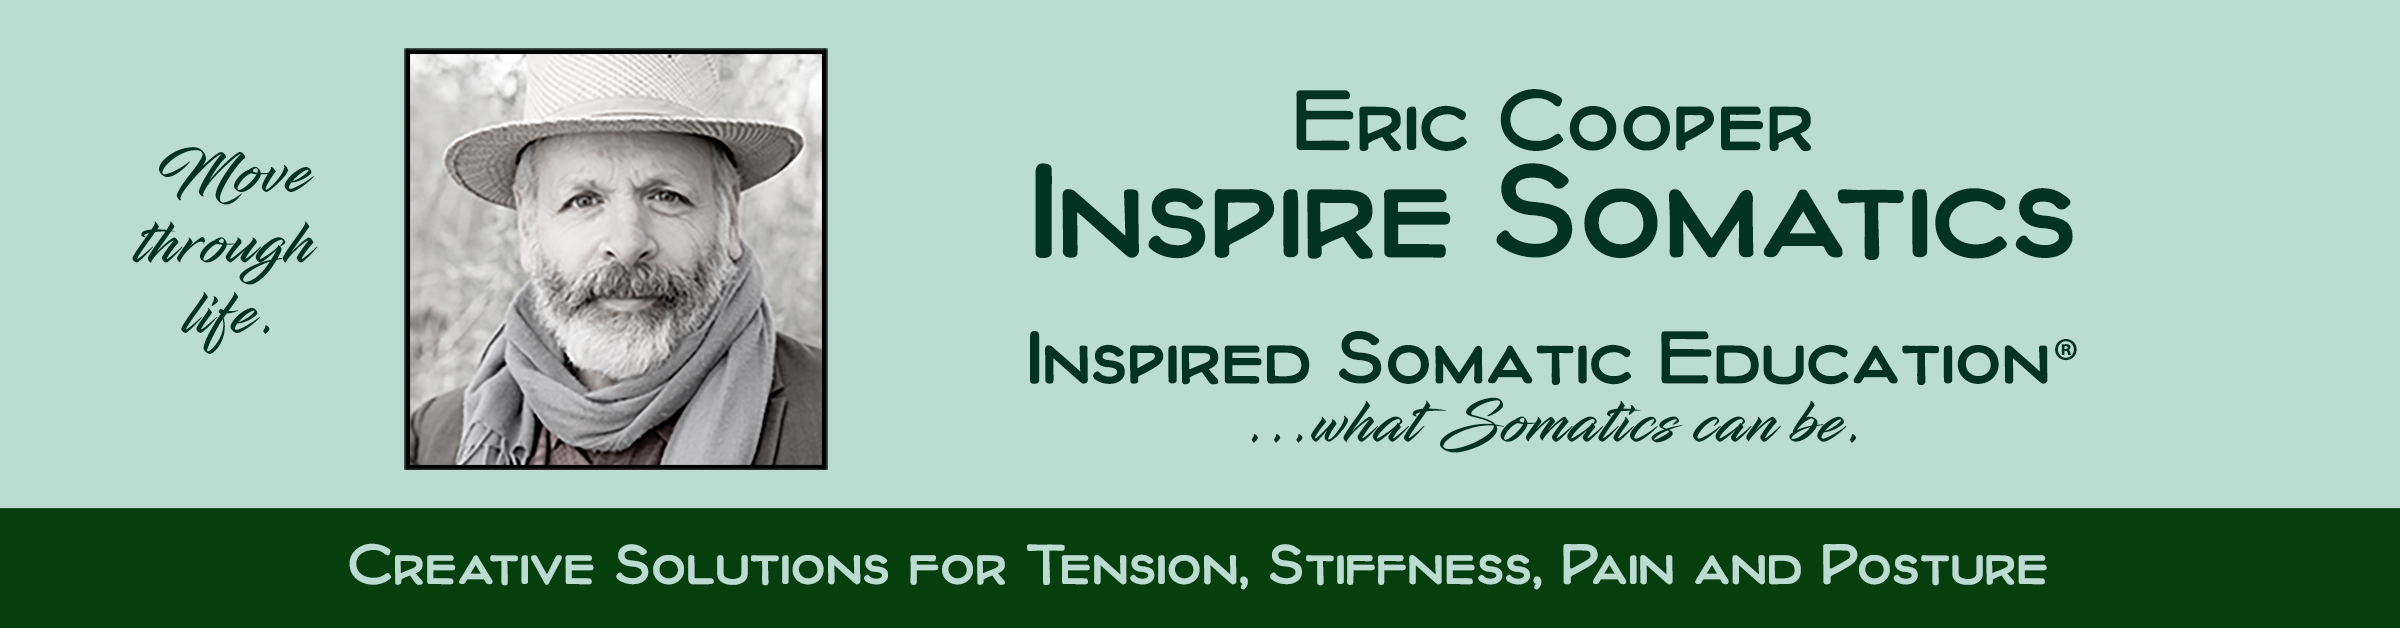 Eric Cooper Somatics Inspire Somatics website banner image